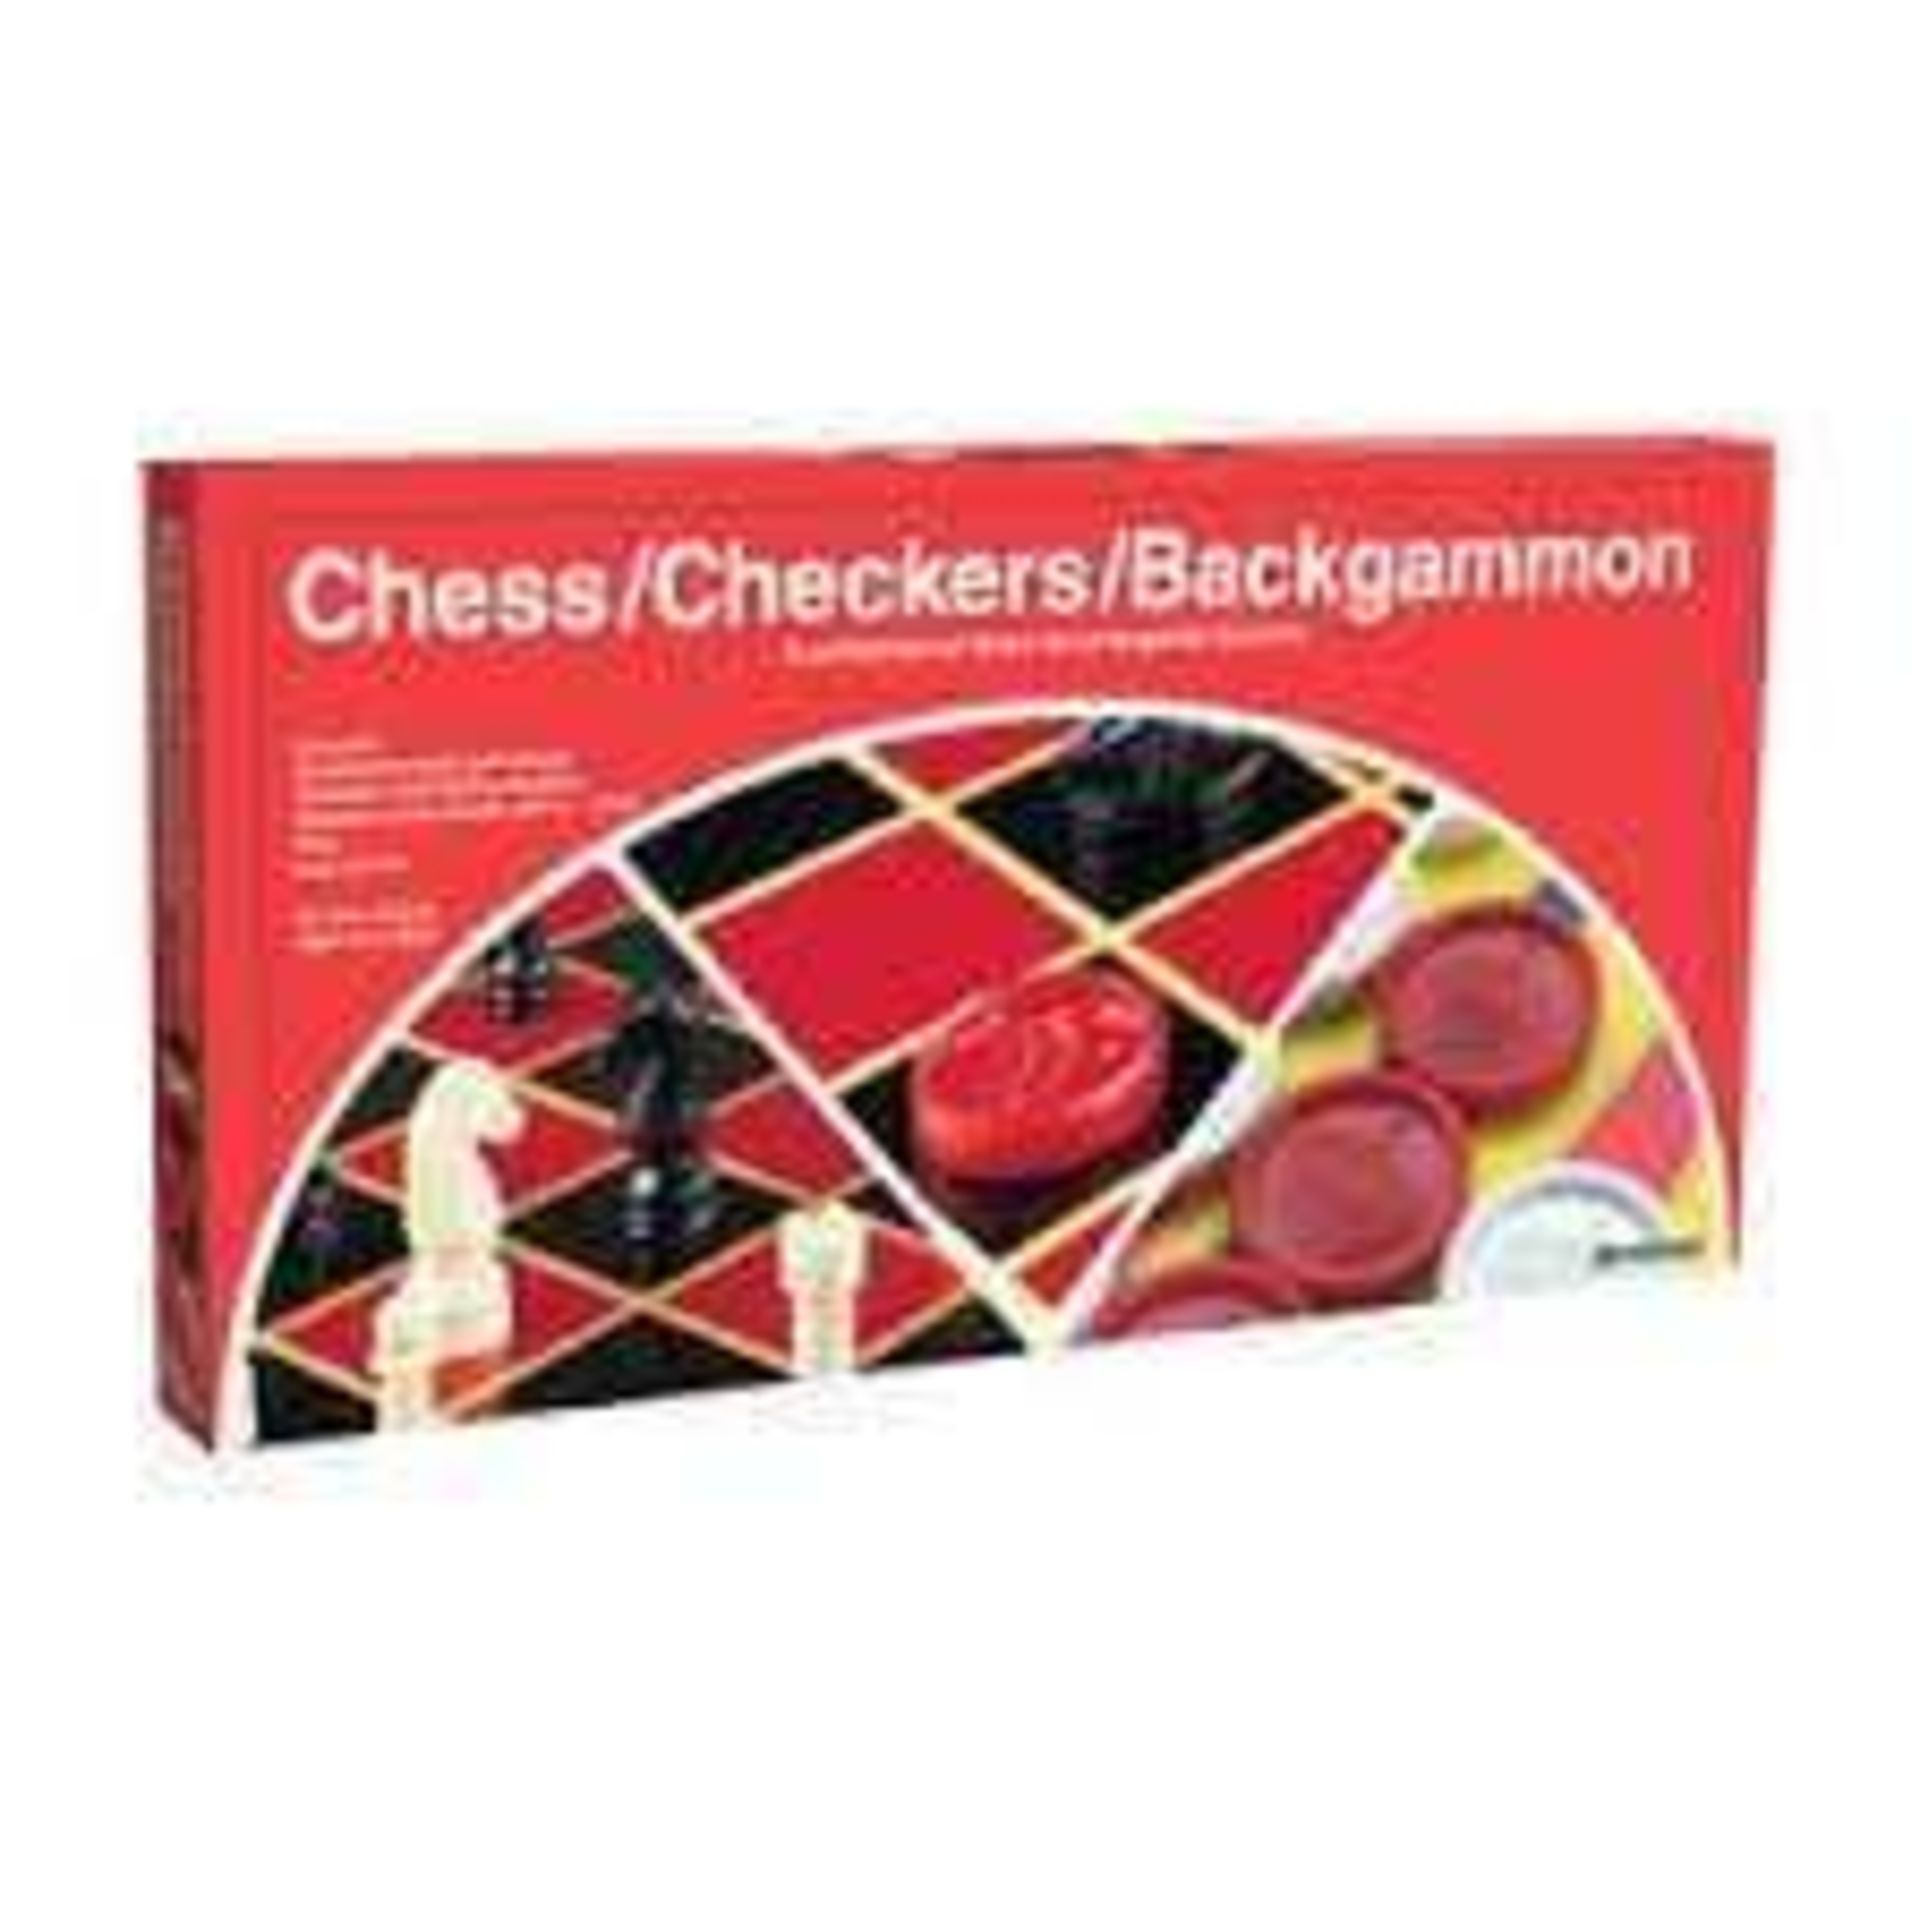 RRP £100 10 Boxed Chess /Checkers/Backgammon Board Games.